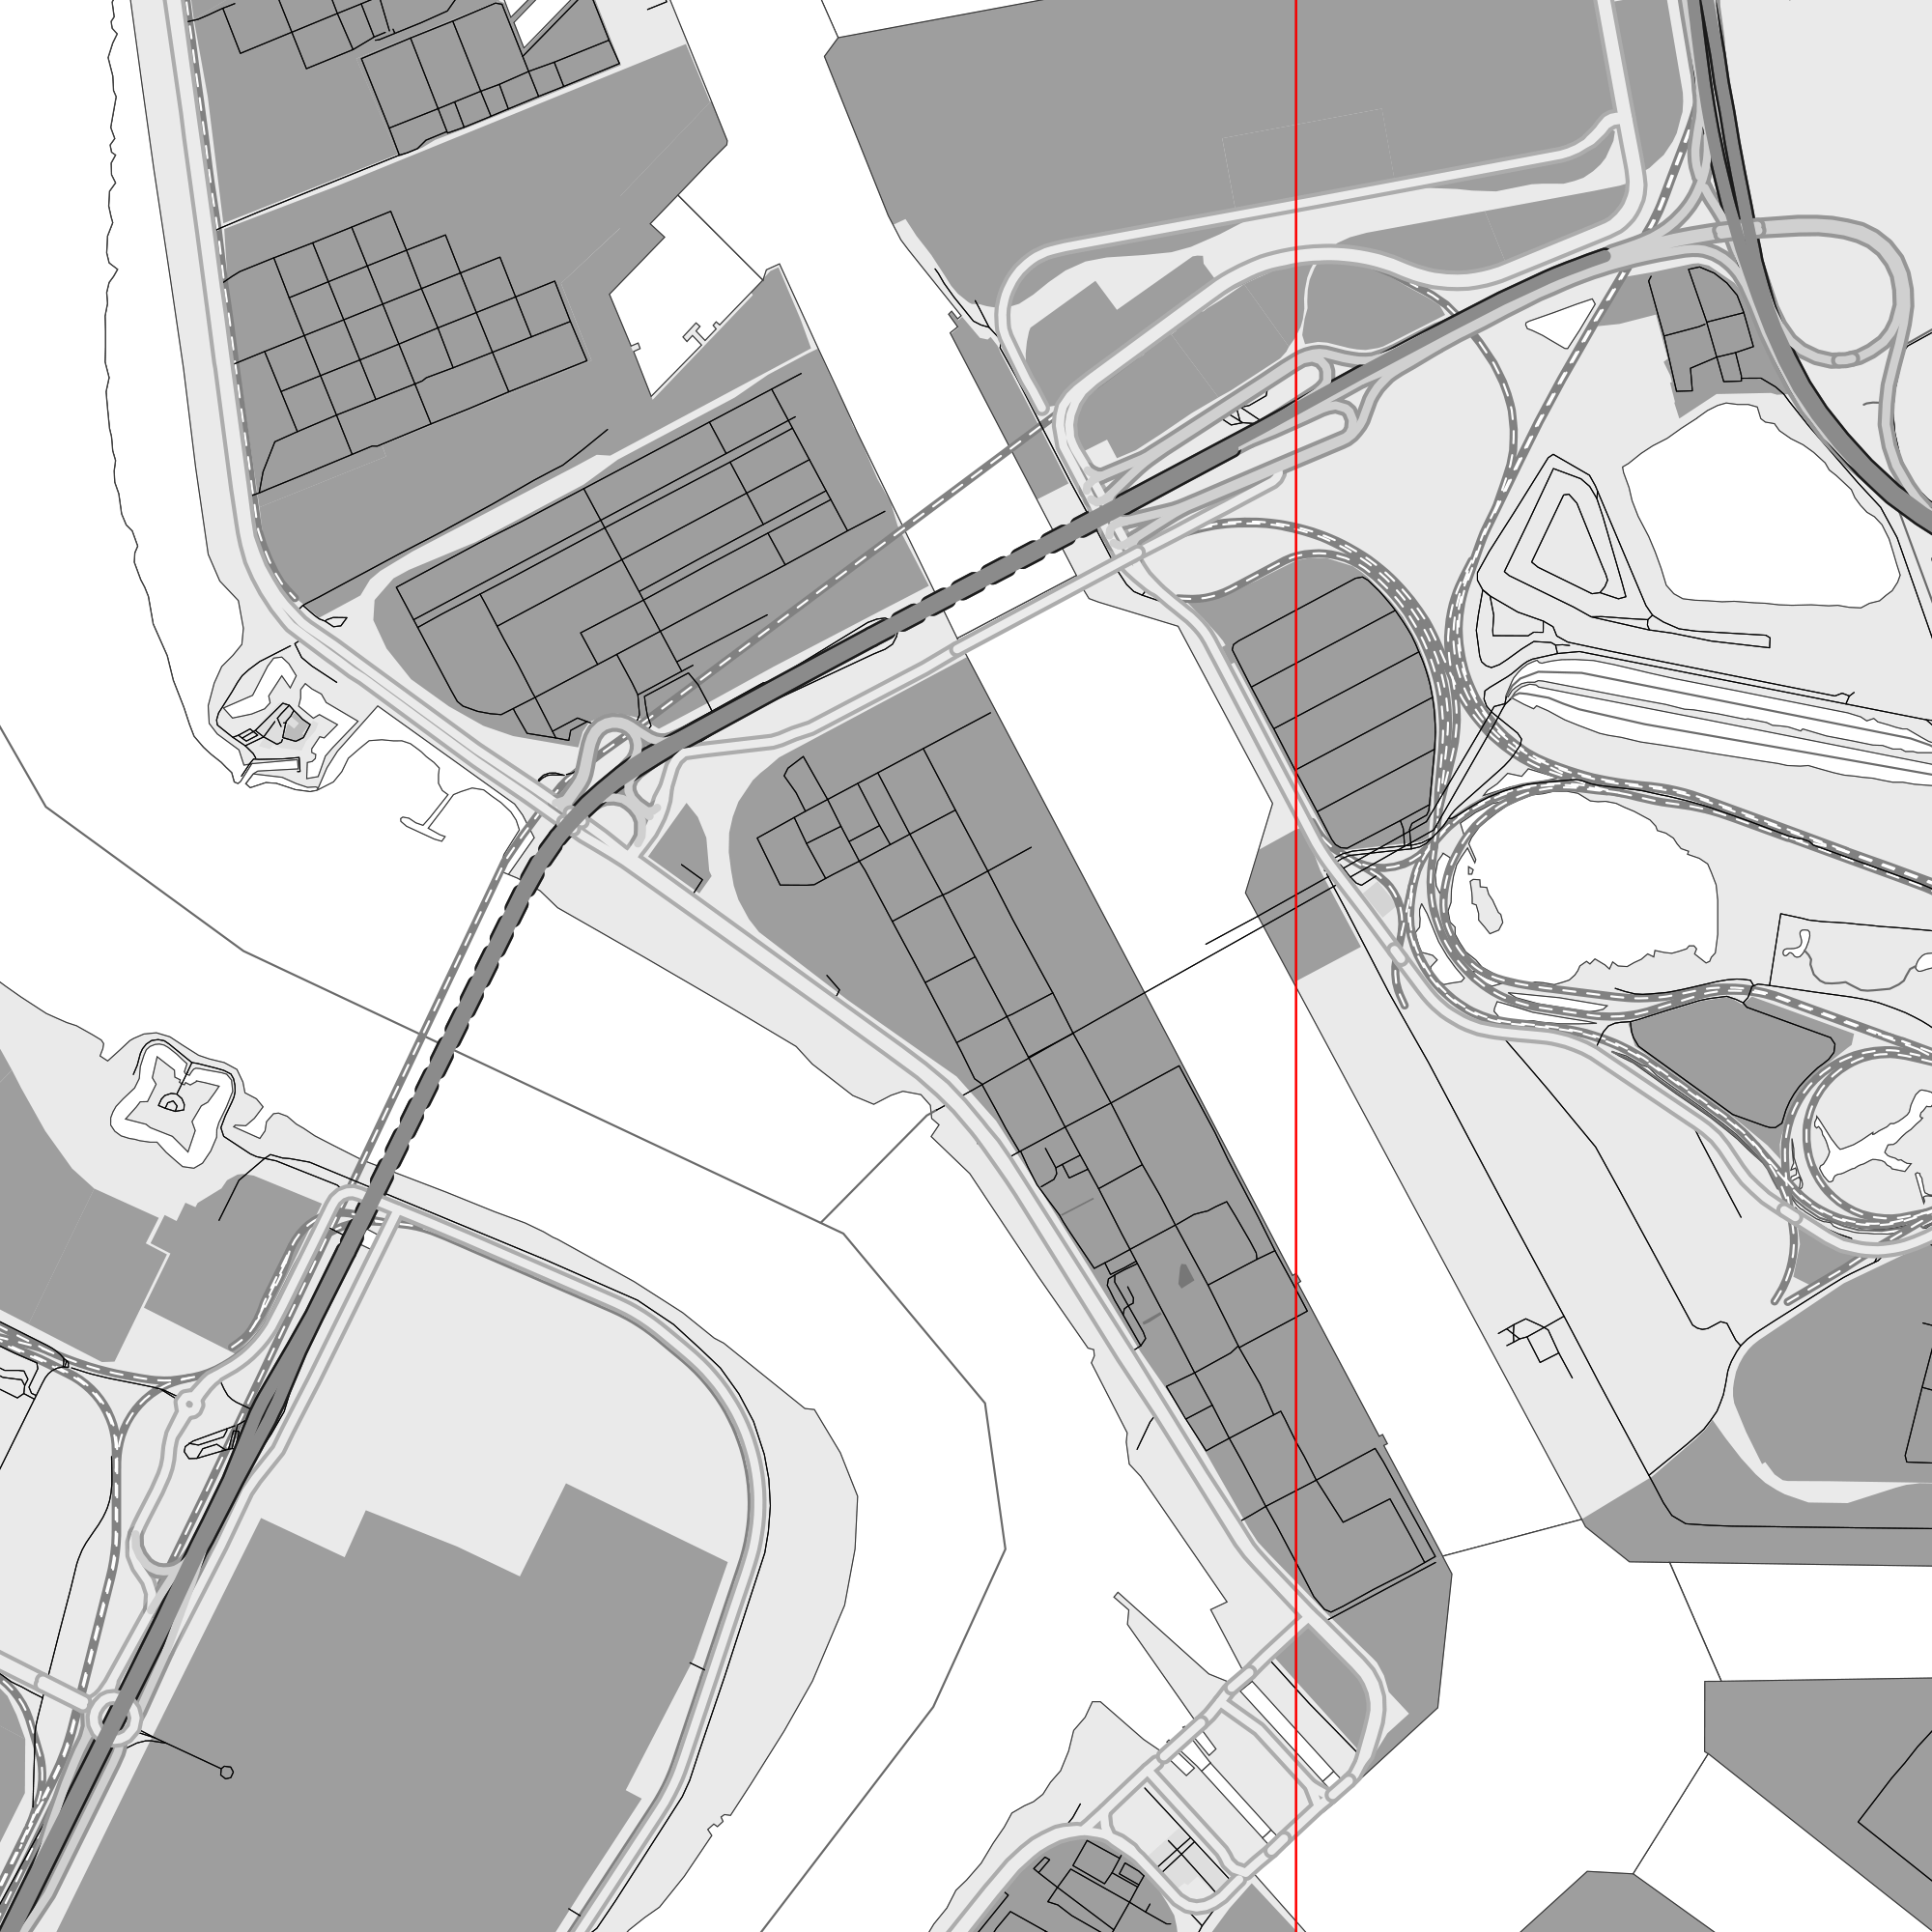 Antwerpen Belgium PDF Vector Map: City Plan Low Detailed (simple white) Street Map editable Adobe PDF in layers